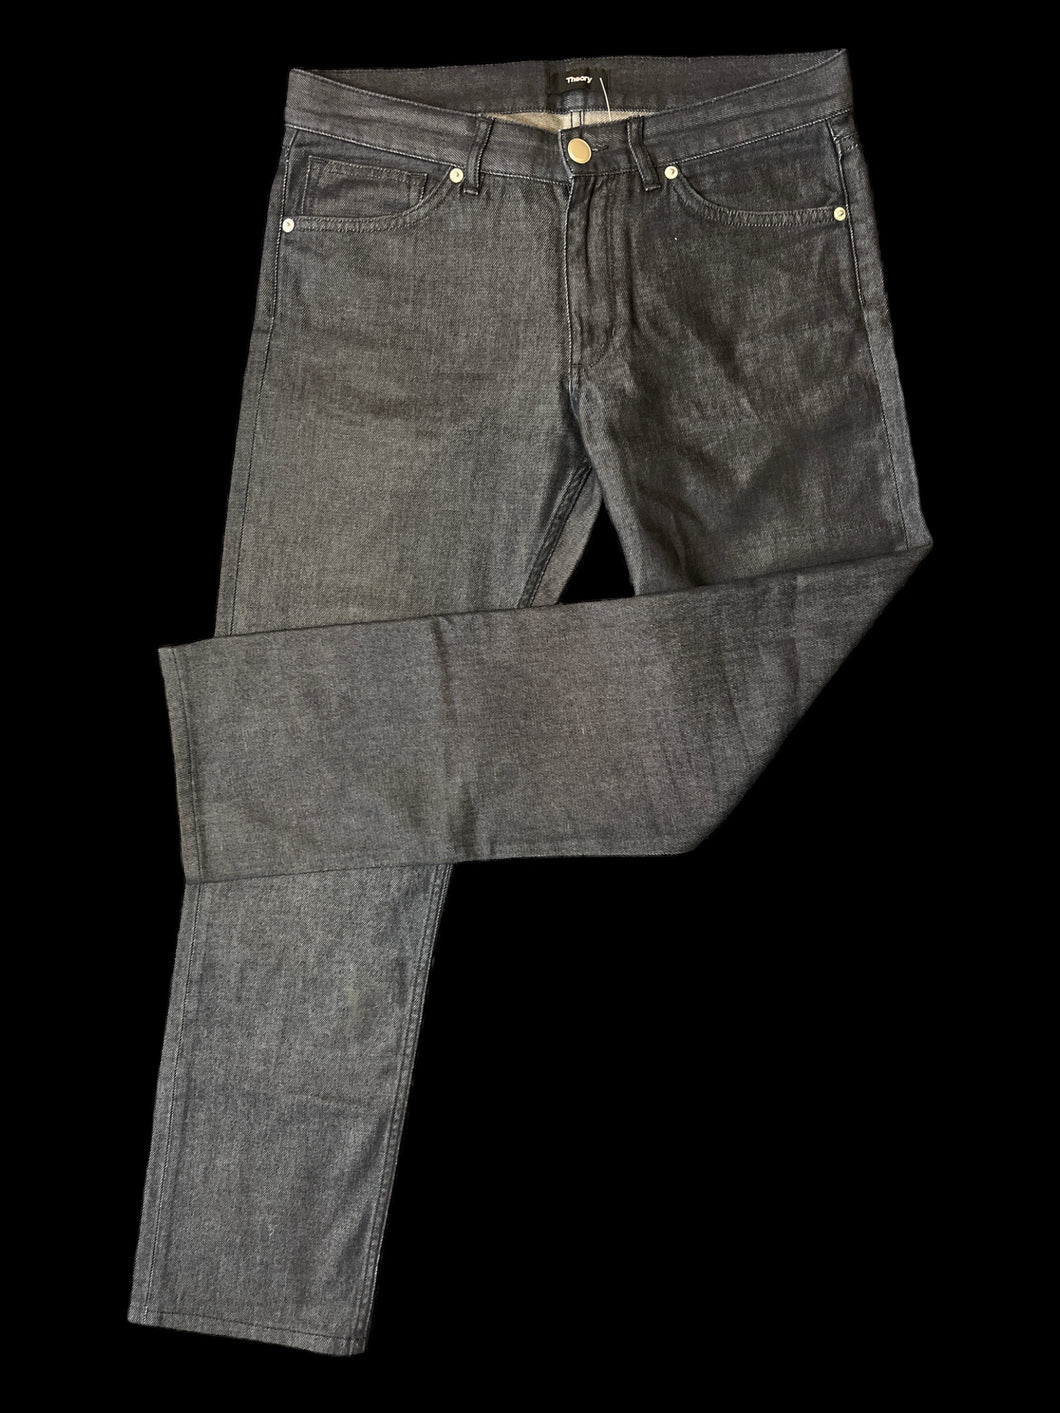 M Dark grey cotton pants w/ straight legs, pockets, & button/zipper closure